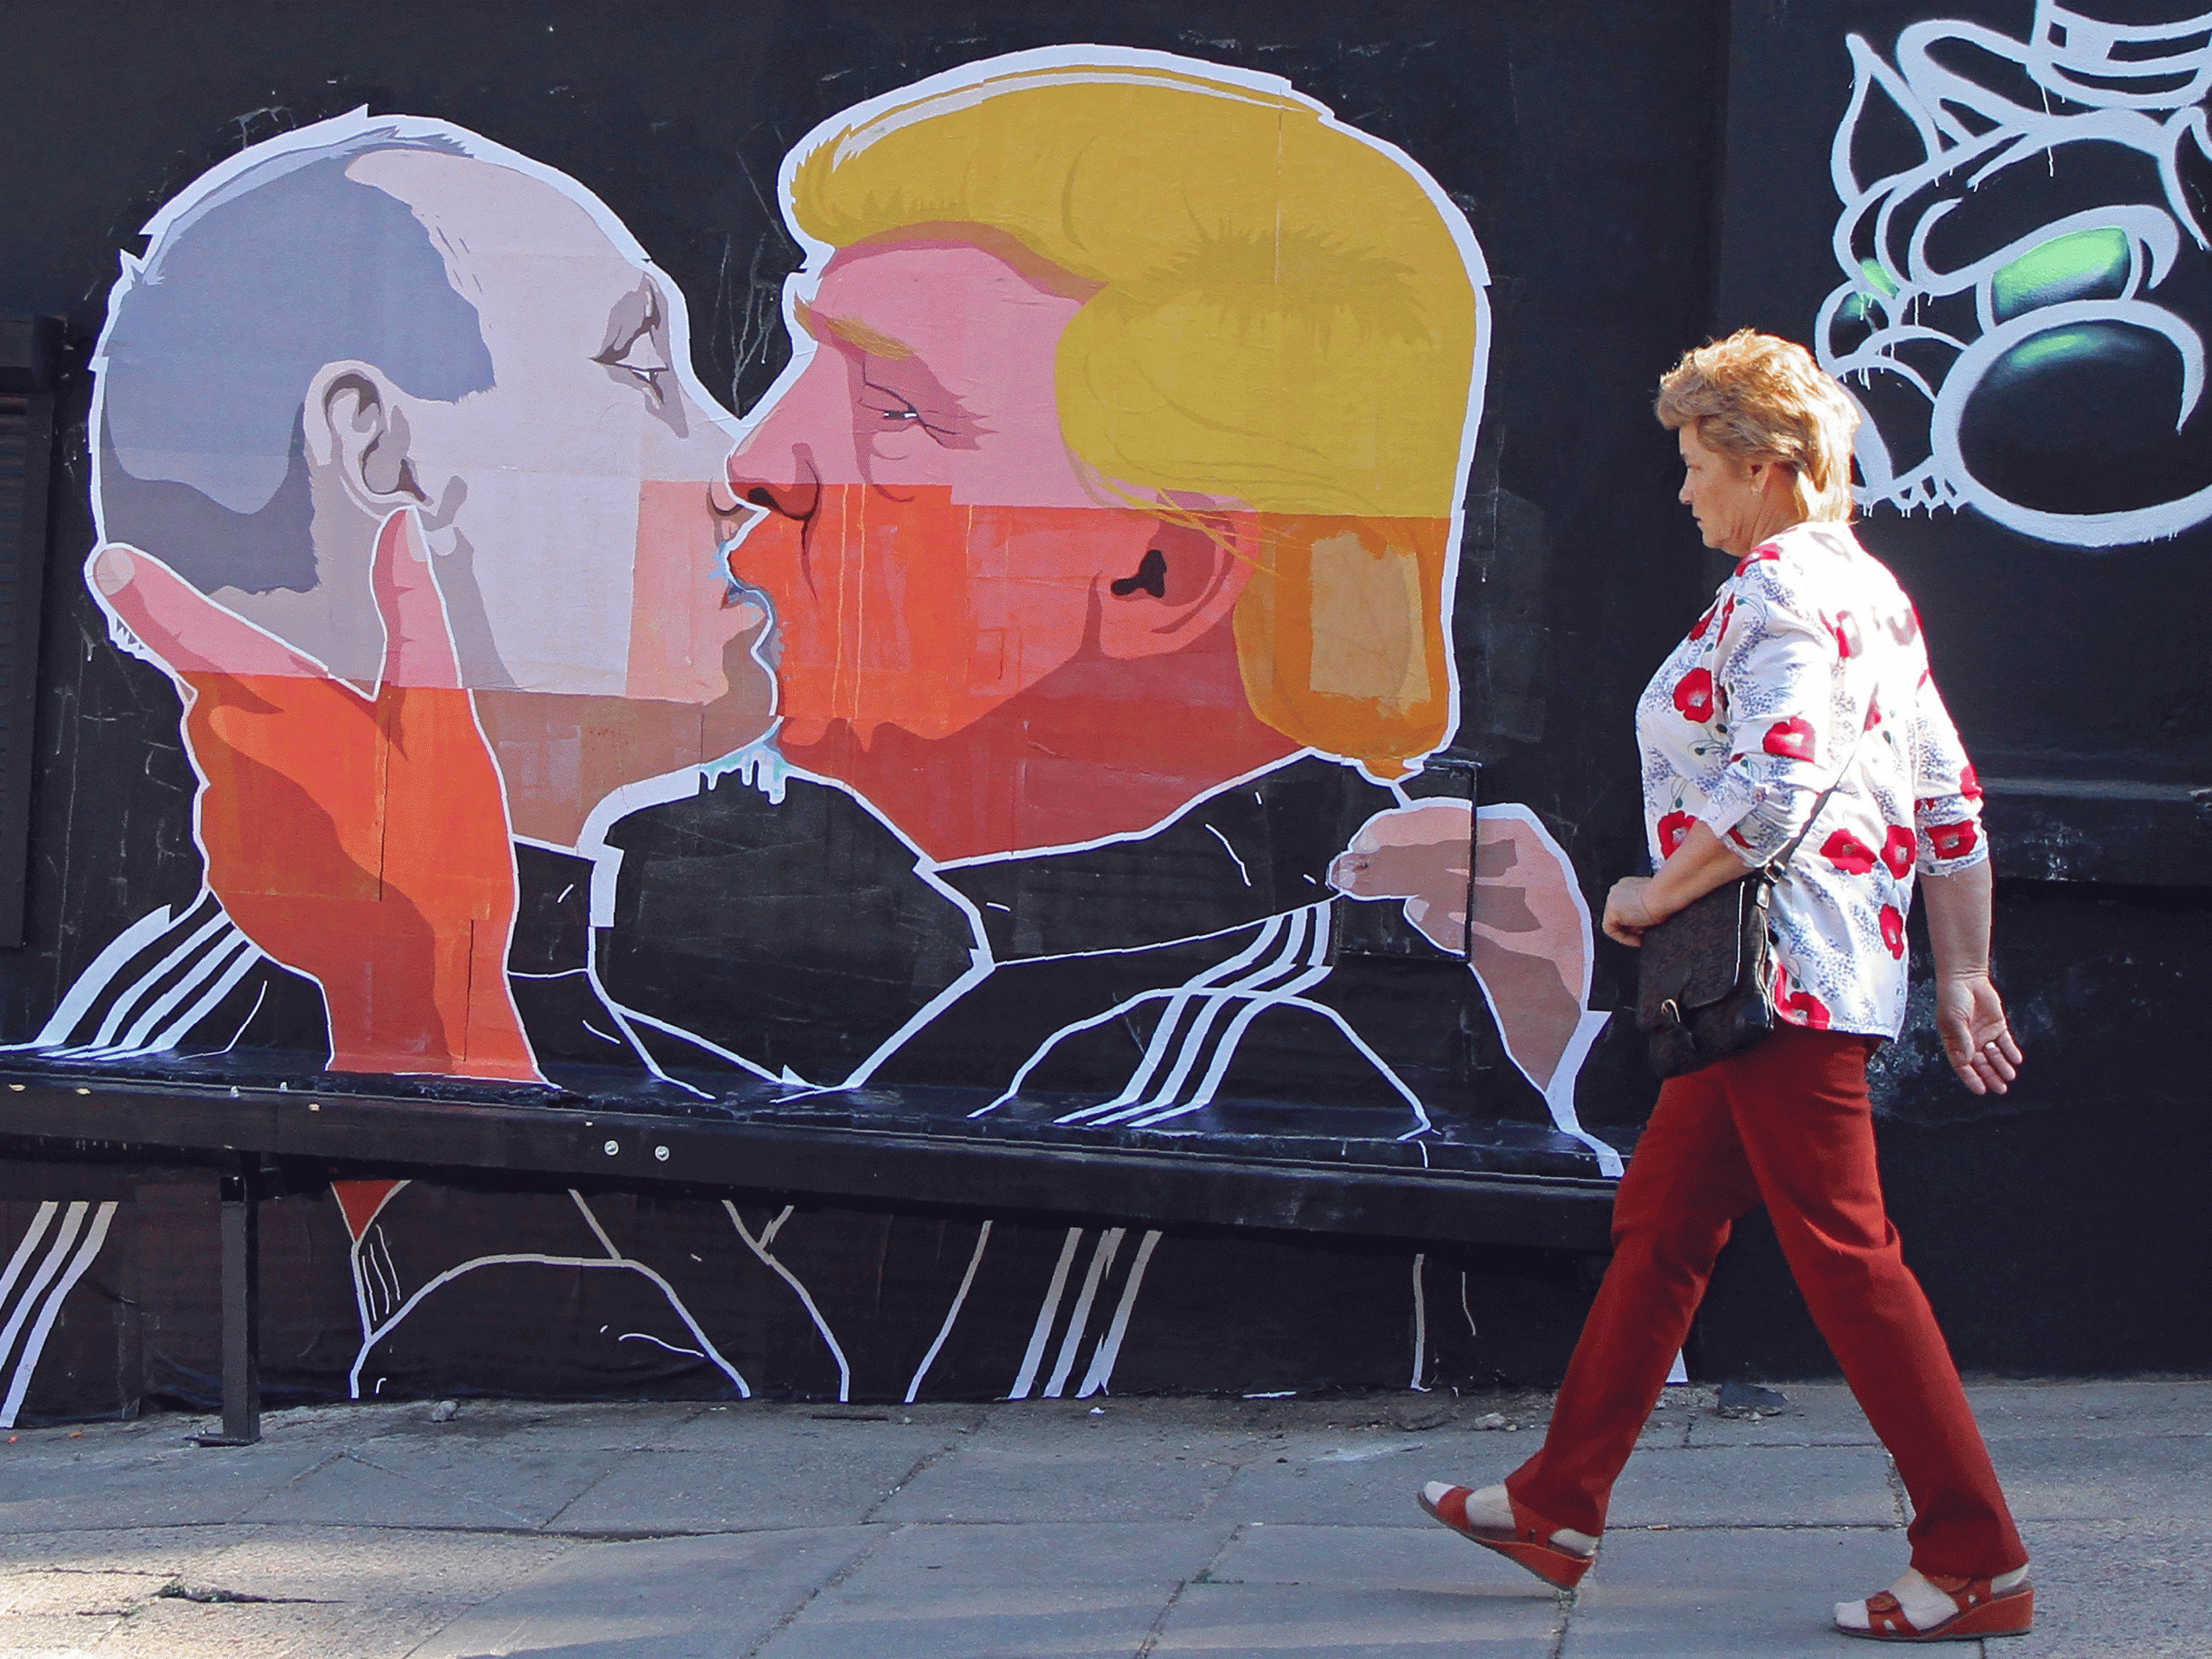 Vladimir Putin was quick to congratulate Donald Trump in a telegram